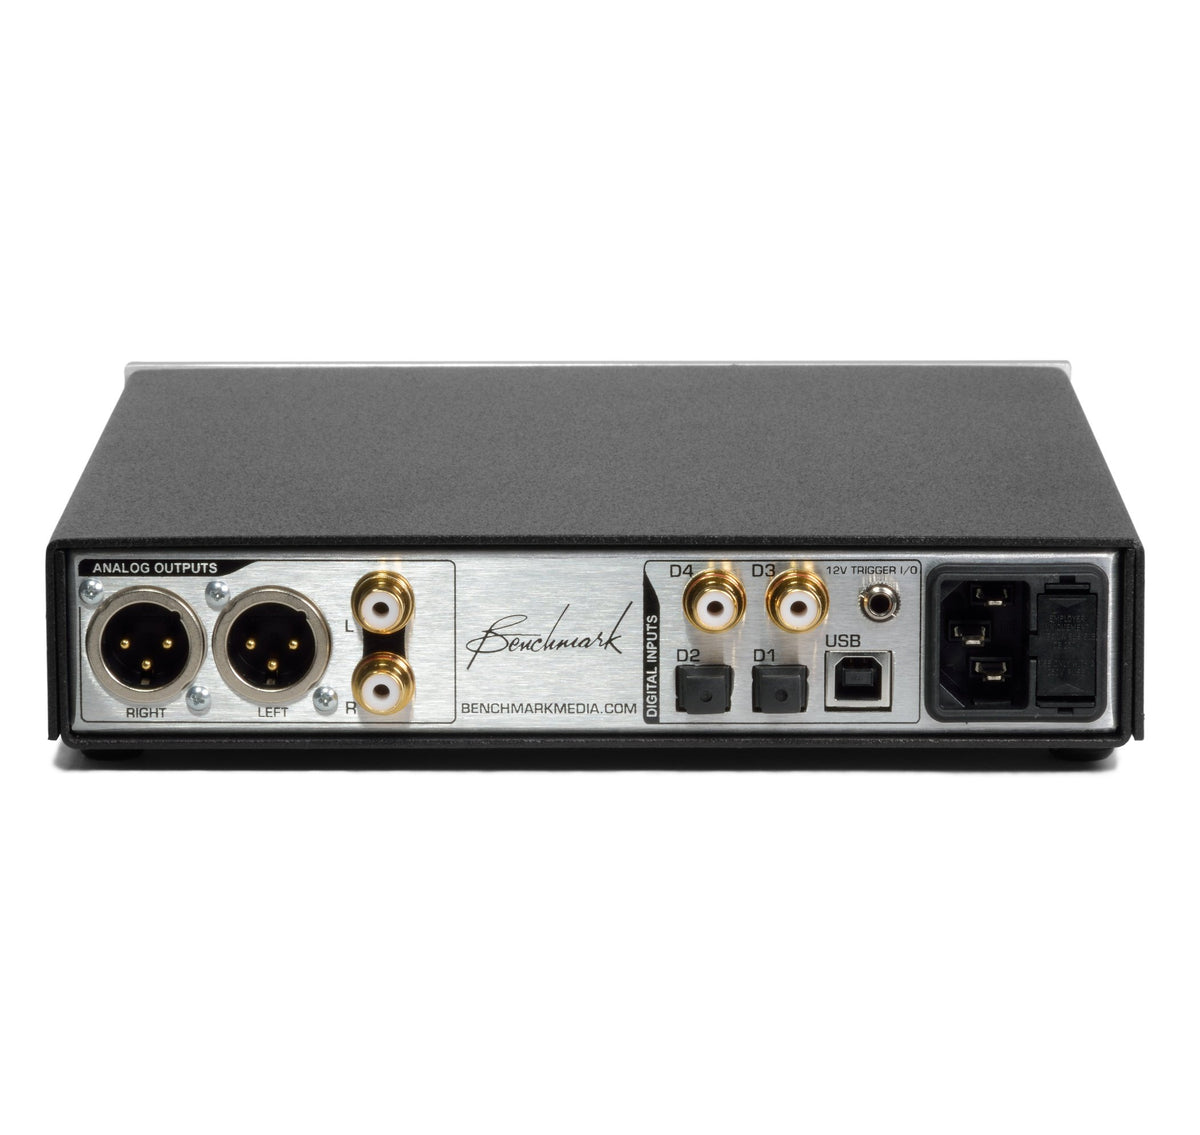 Benchmark DAC3 B - Digital to Analog Audio Converter - Benchmark ...